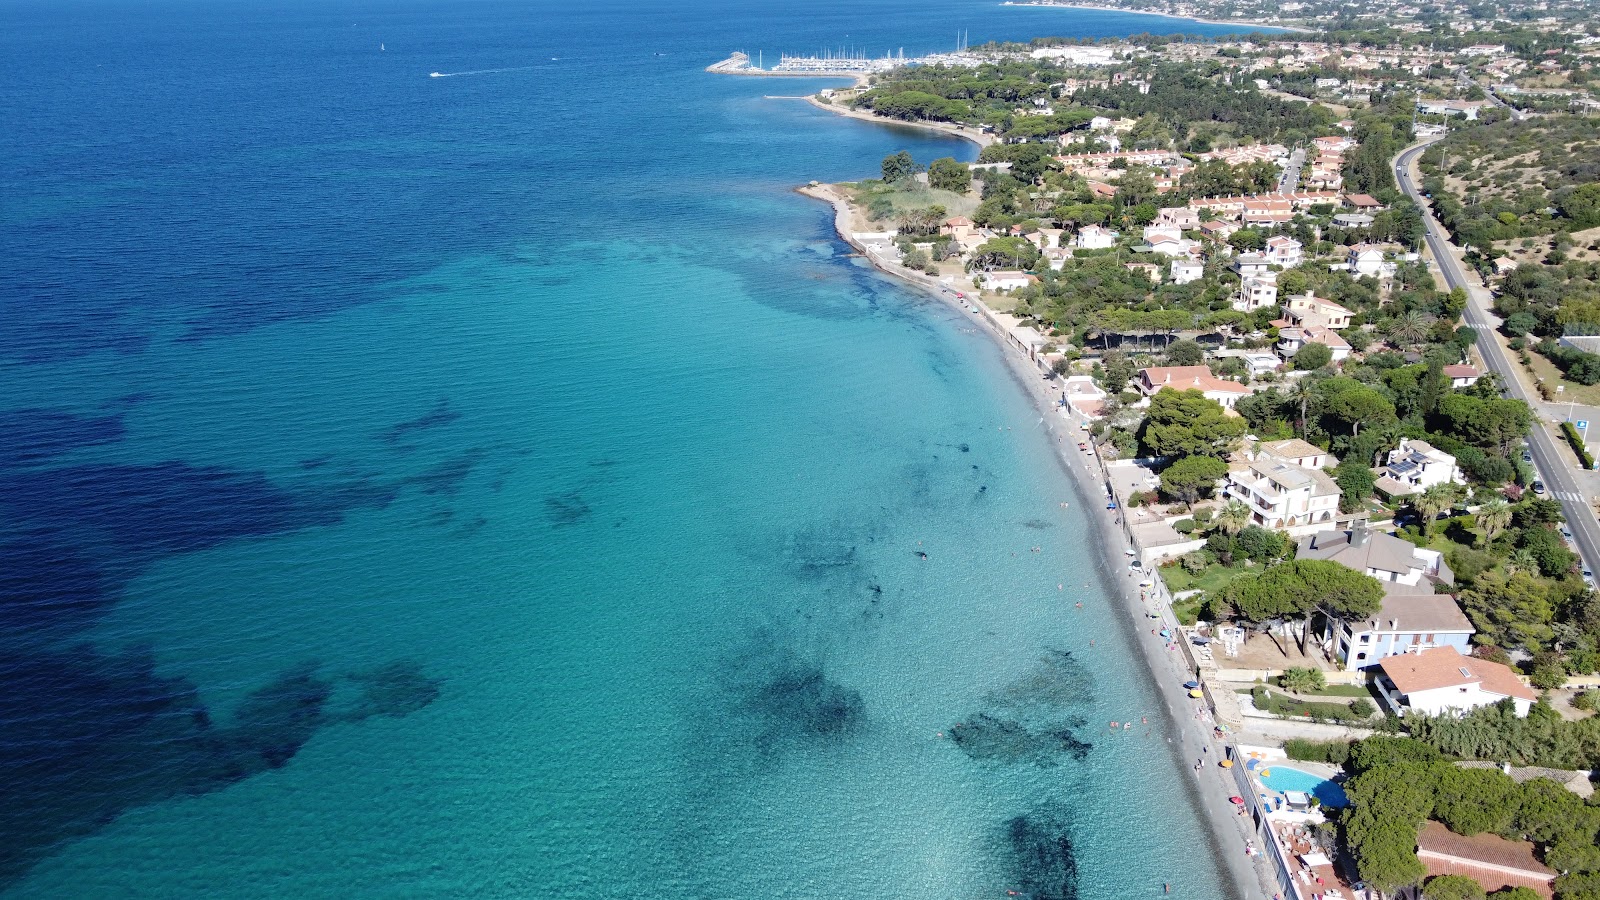 Photo de Spiaggia di Capitana avec l'eau cristalline de surface